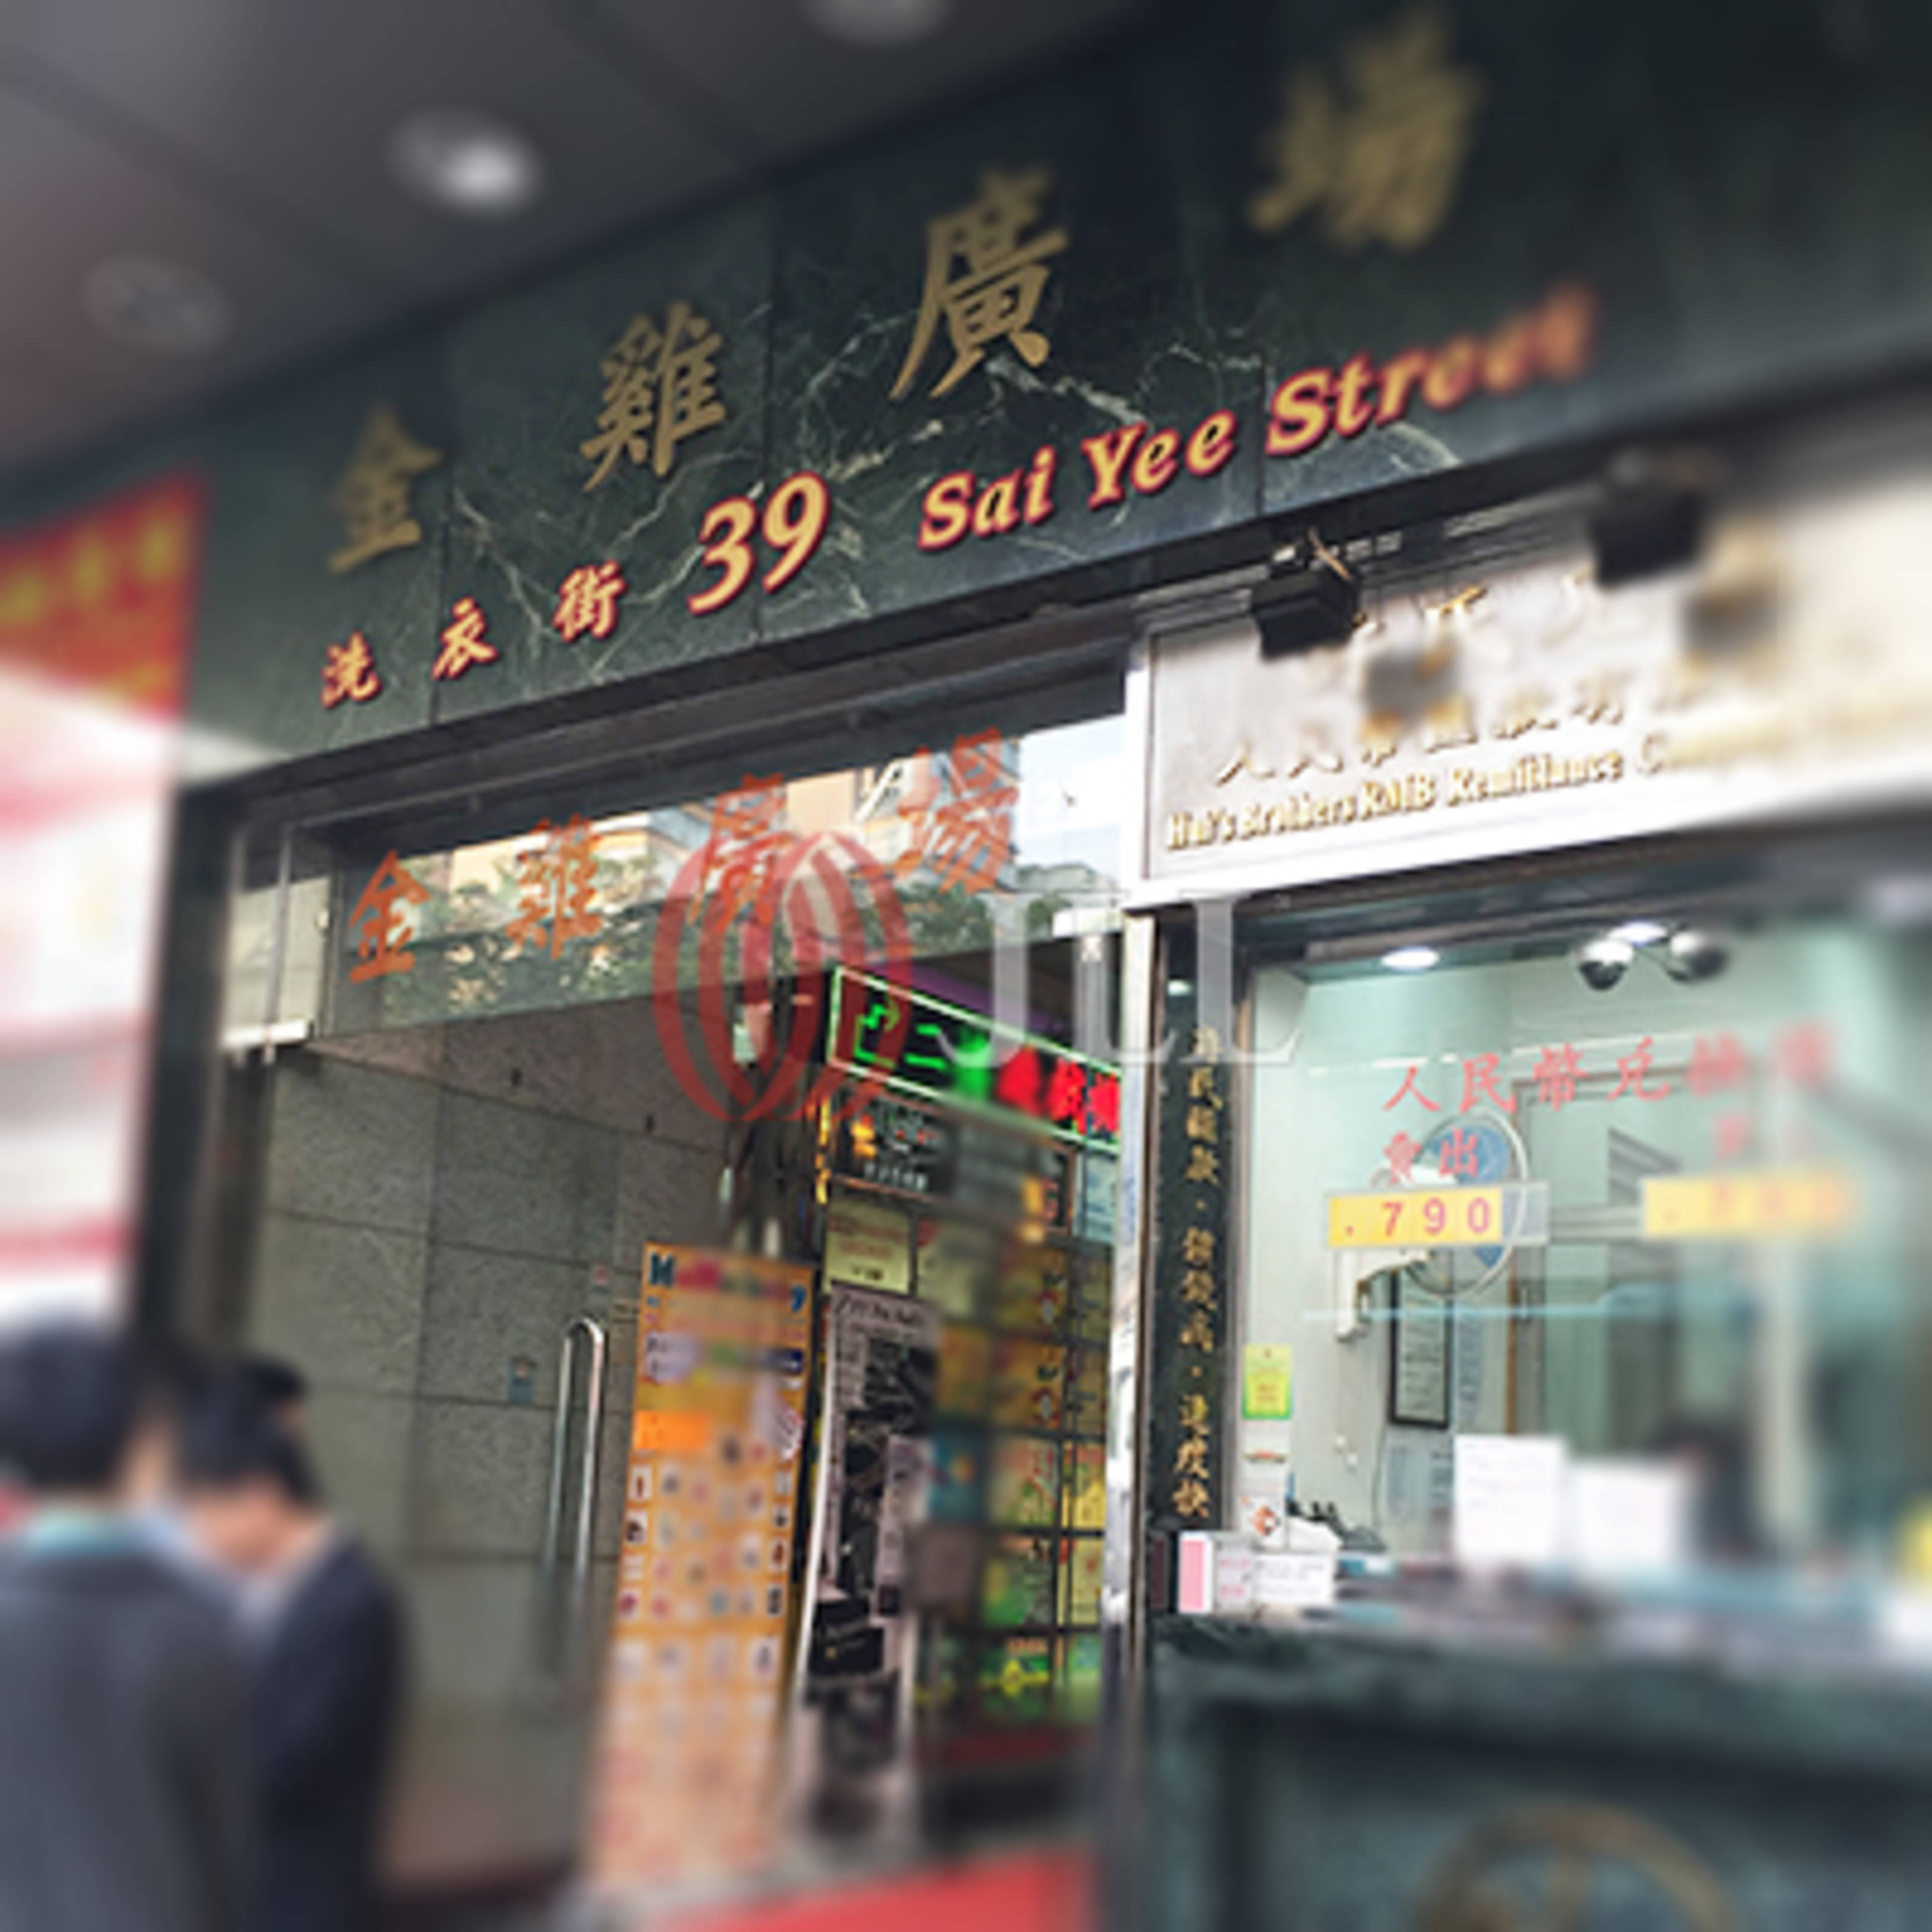 39-55 Sai Yee Street